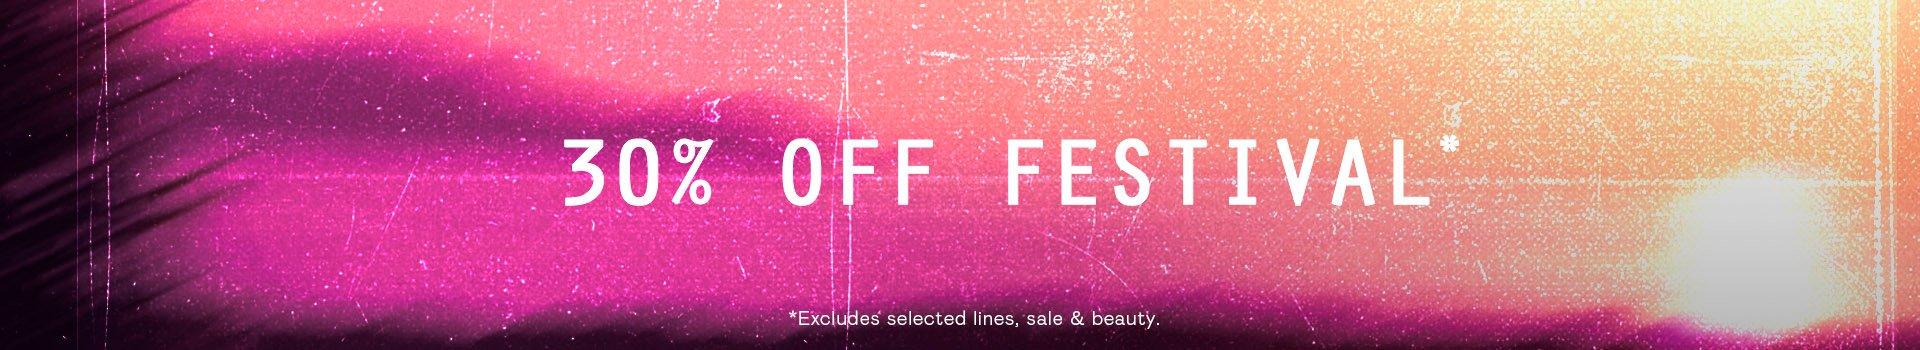 20% OFF Festival